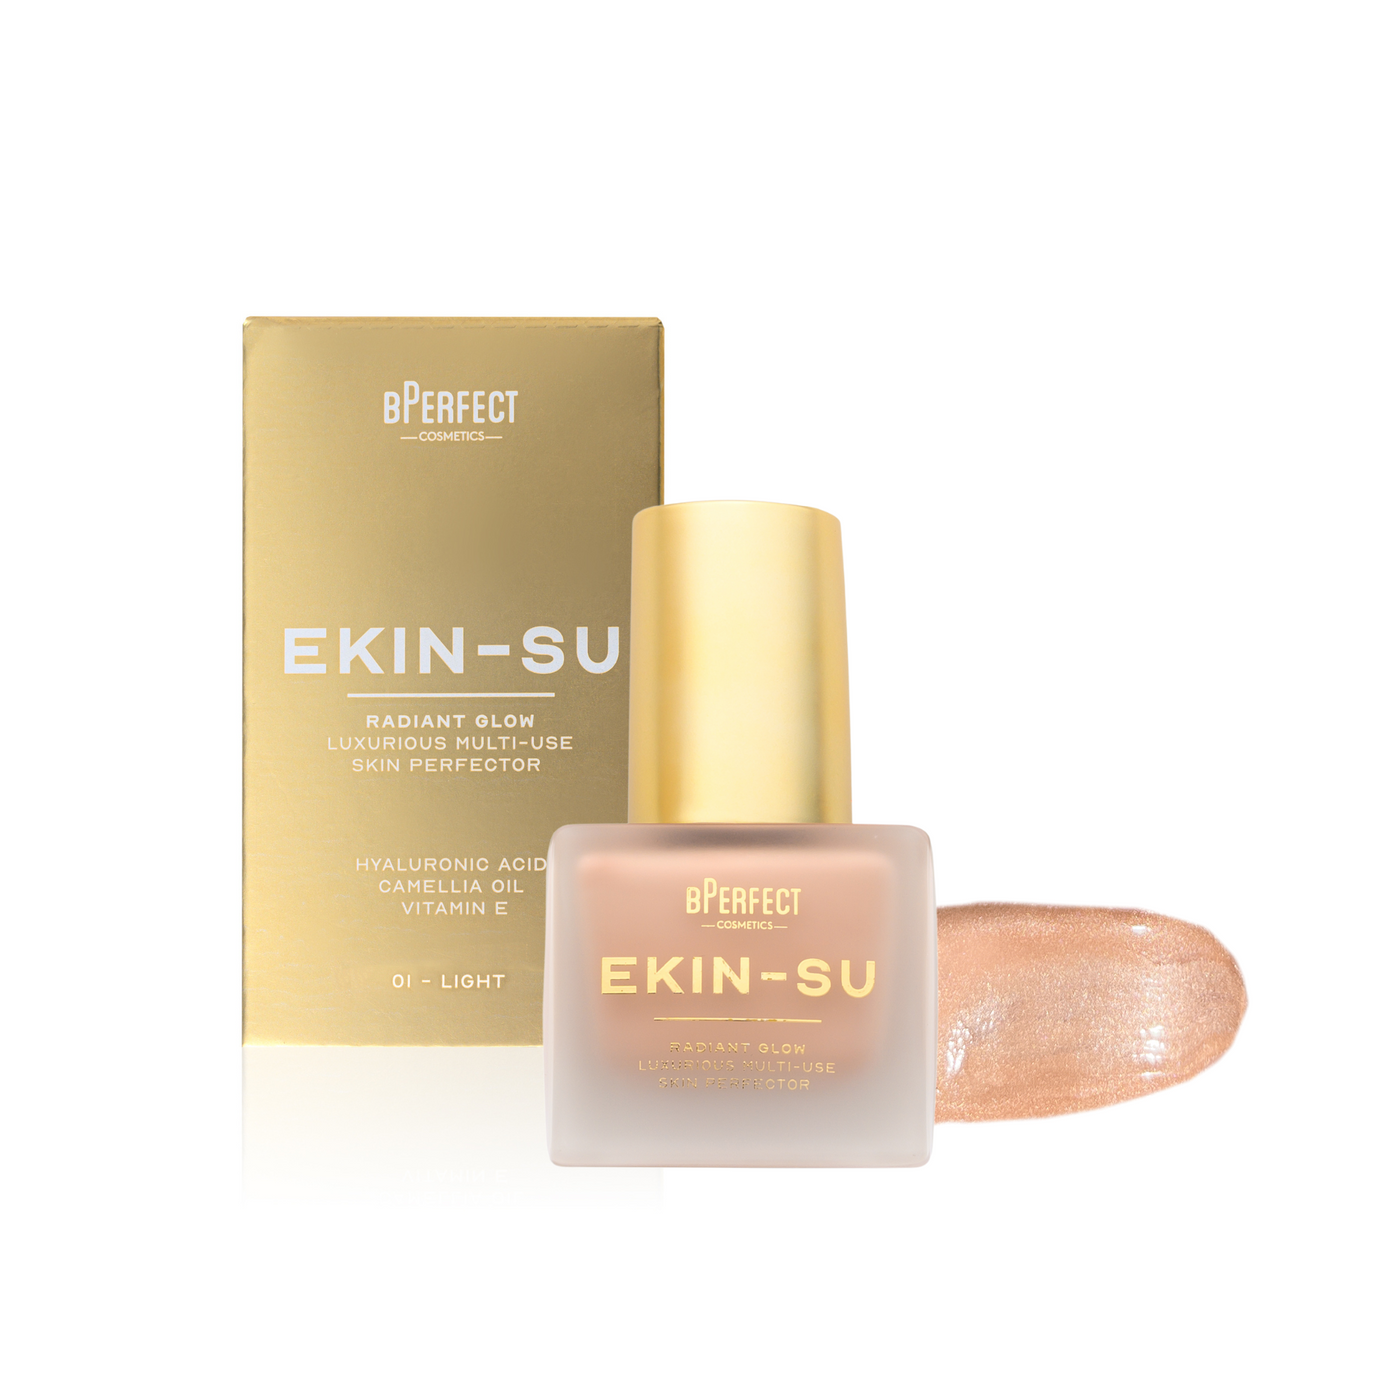 BPerfect x Ekin-Su - Radiant Glow Skin Perfector - Artist Bundle